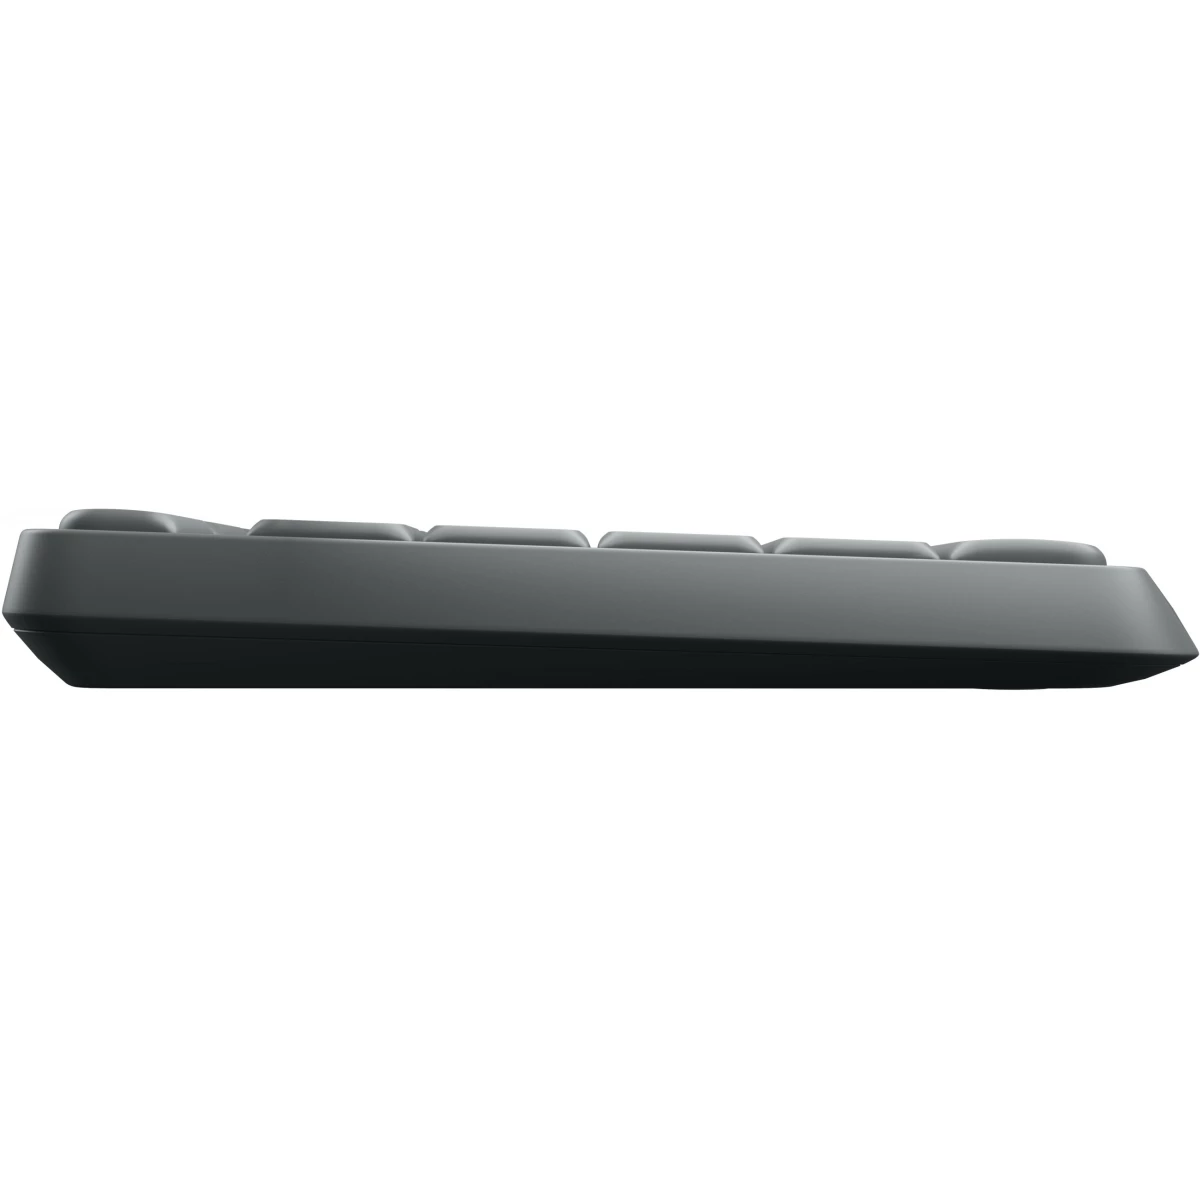 Logitech Wireless Keyboard and Mouse -Grey- MK235